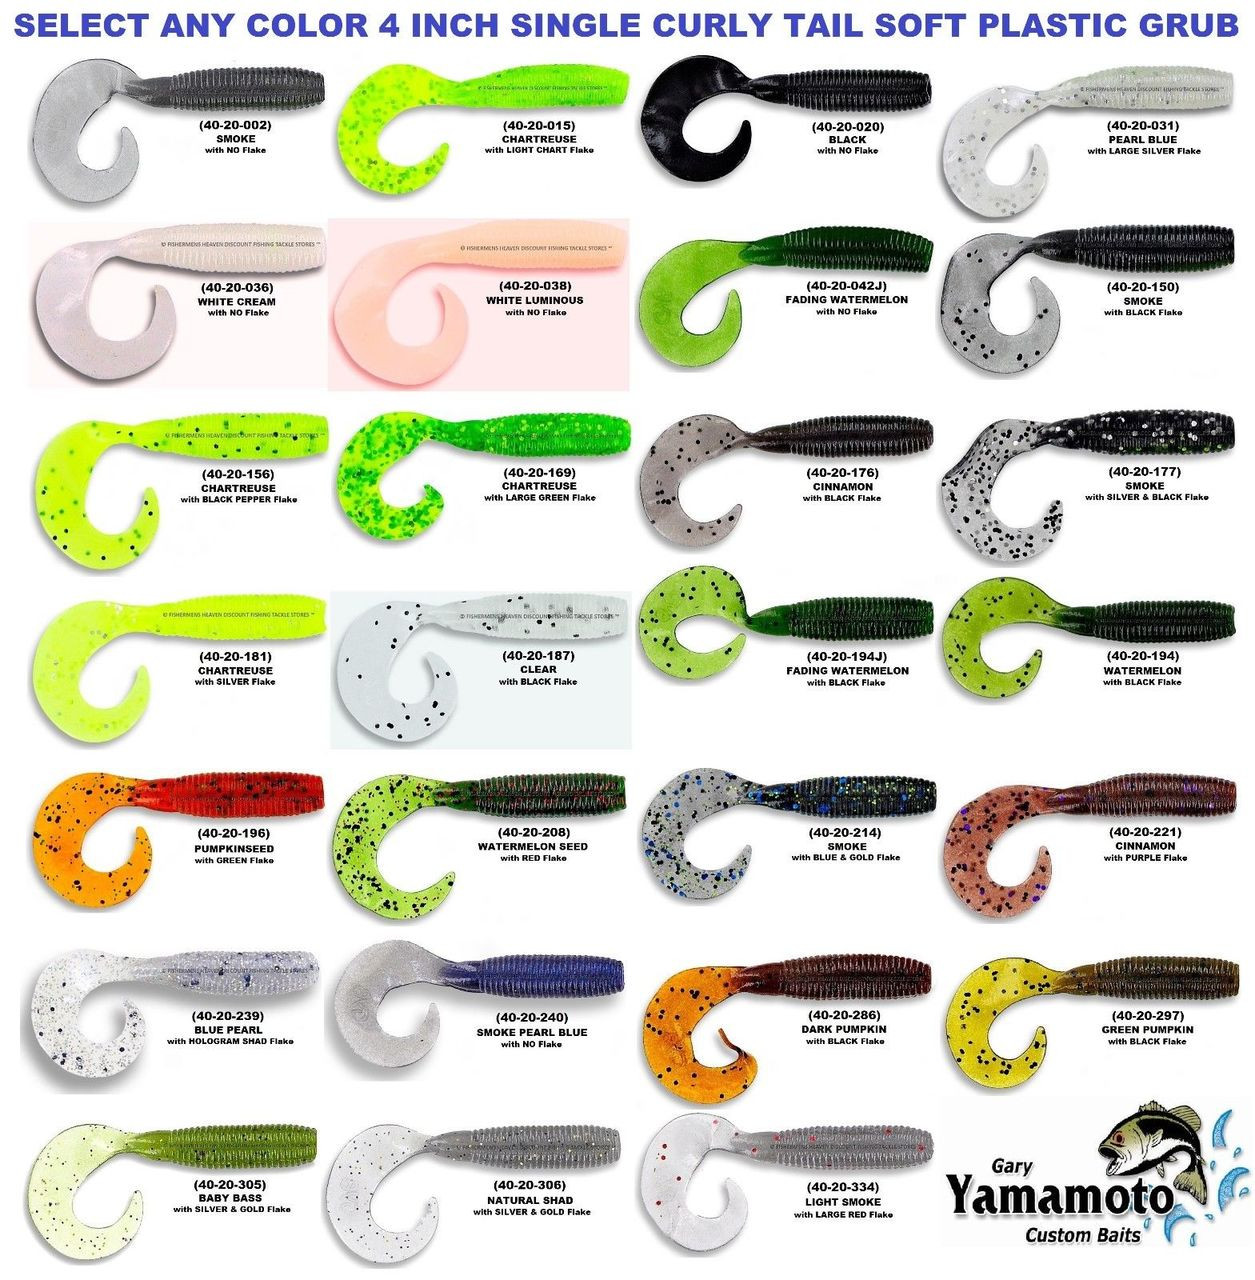 Gary Yamamoto Grub 3 fishing lures original range of colors 